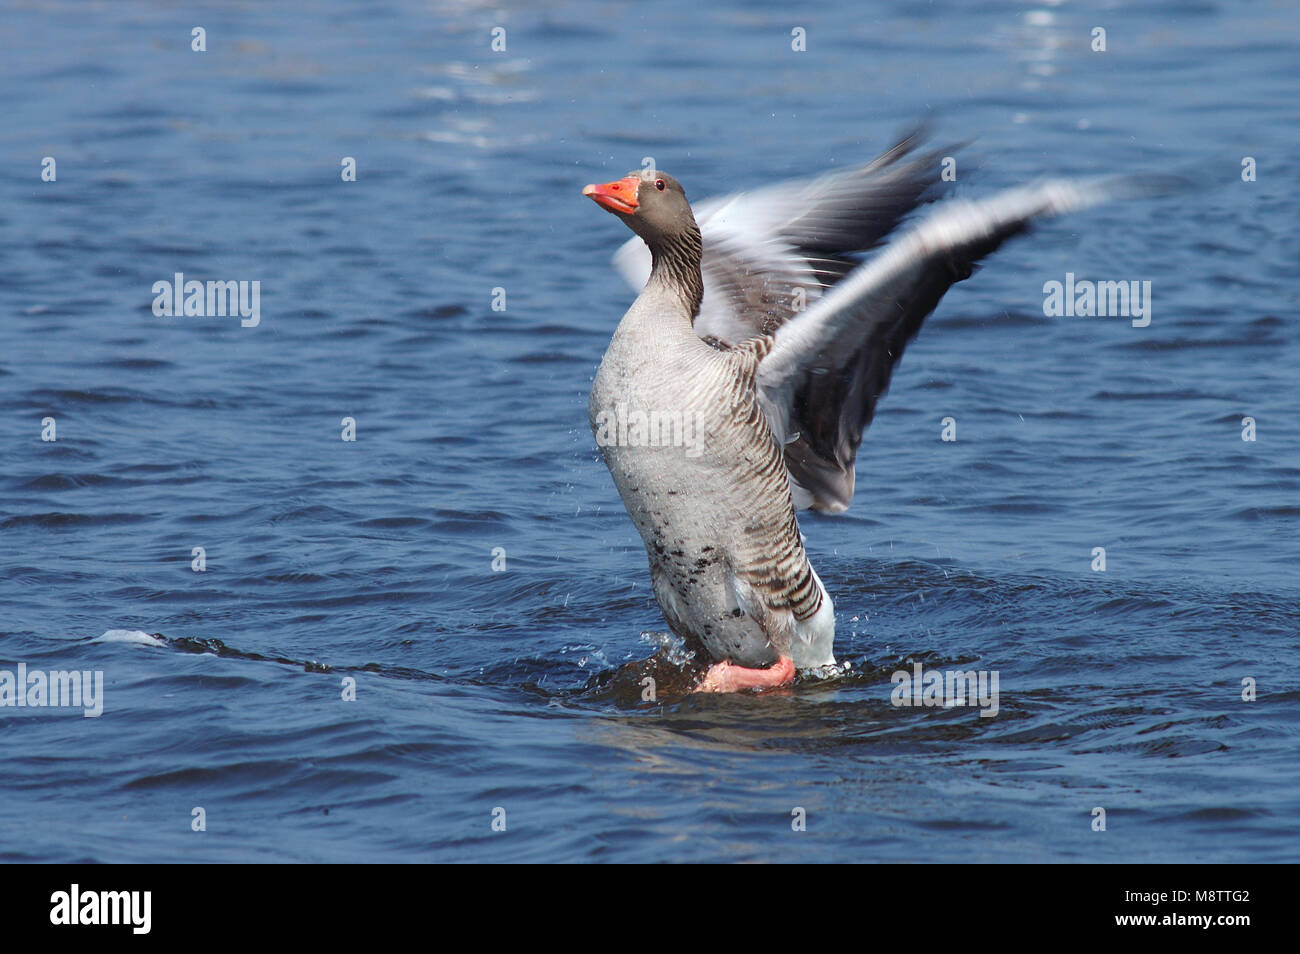 Grauwe Gans flapperend met vleugels; Greylag Goose wingflapping Stock Photo